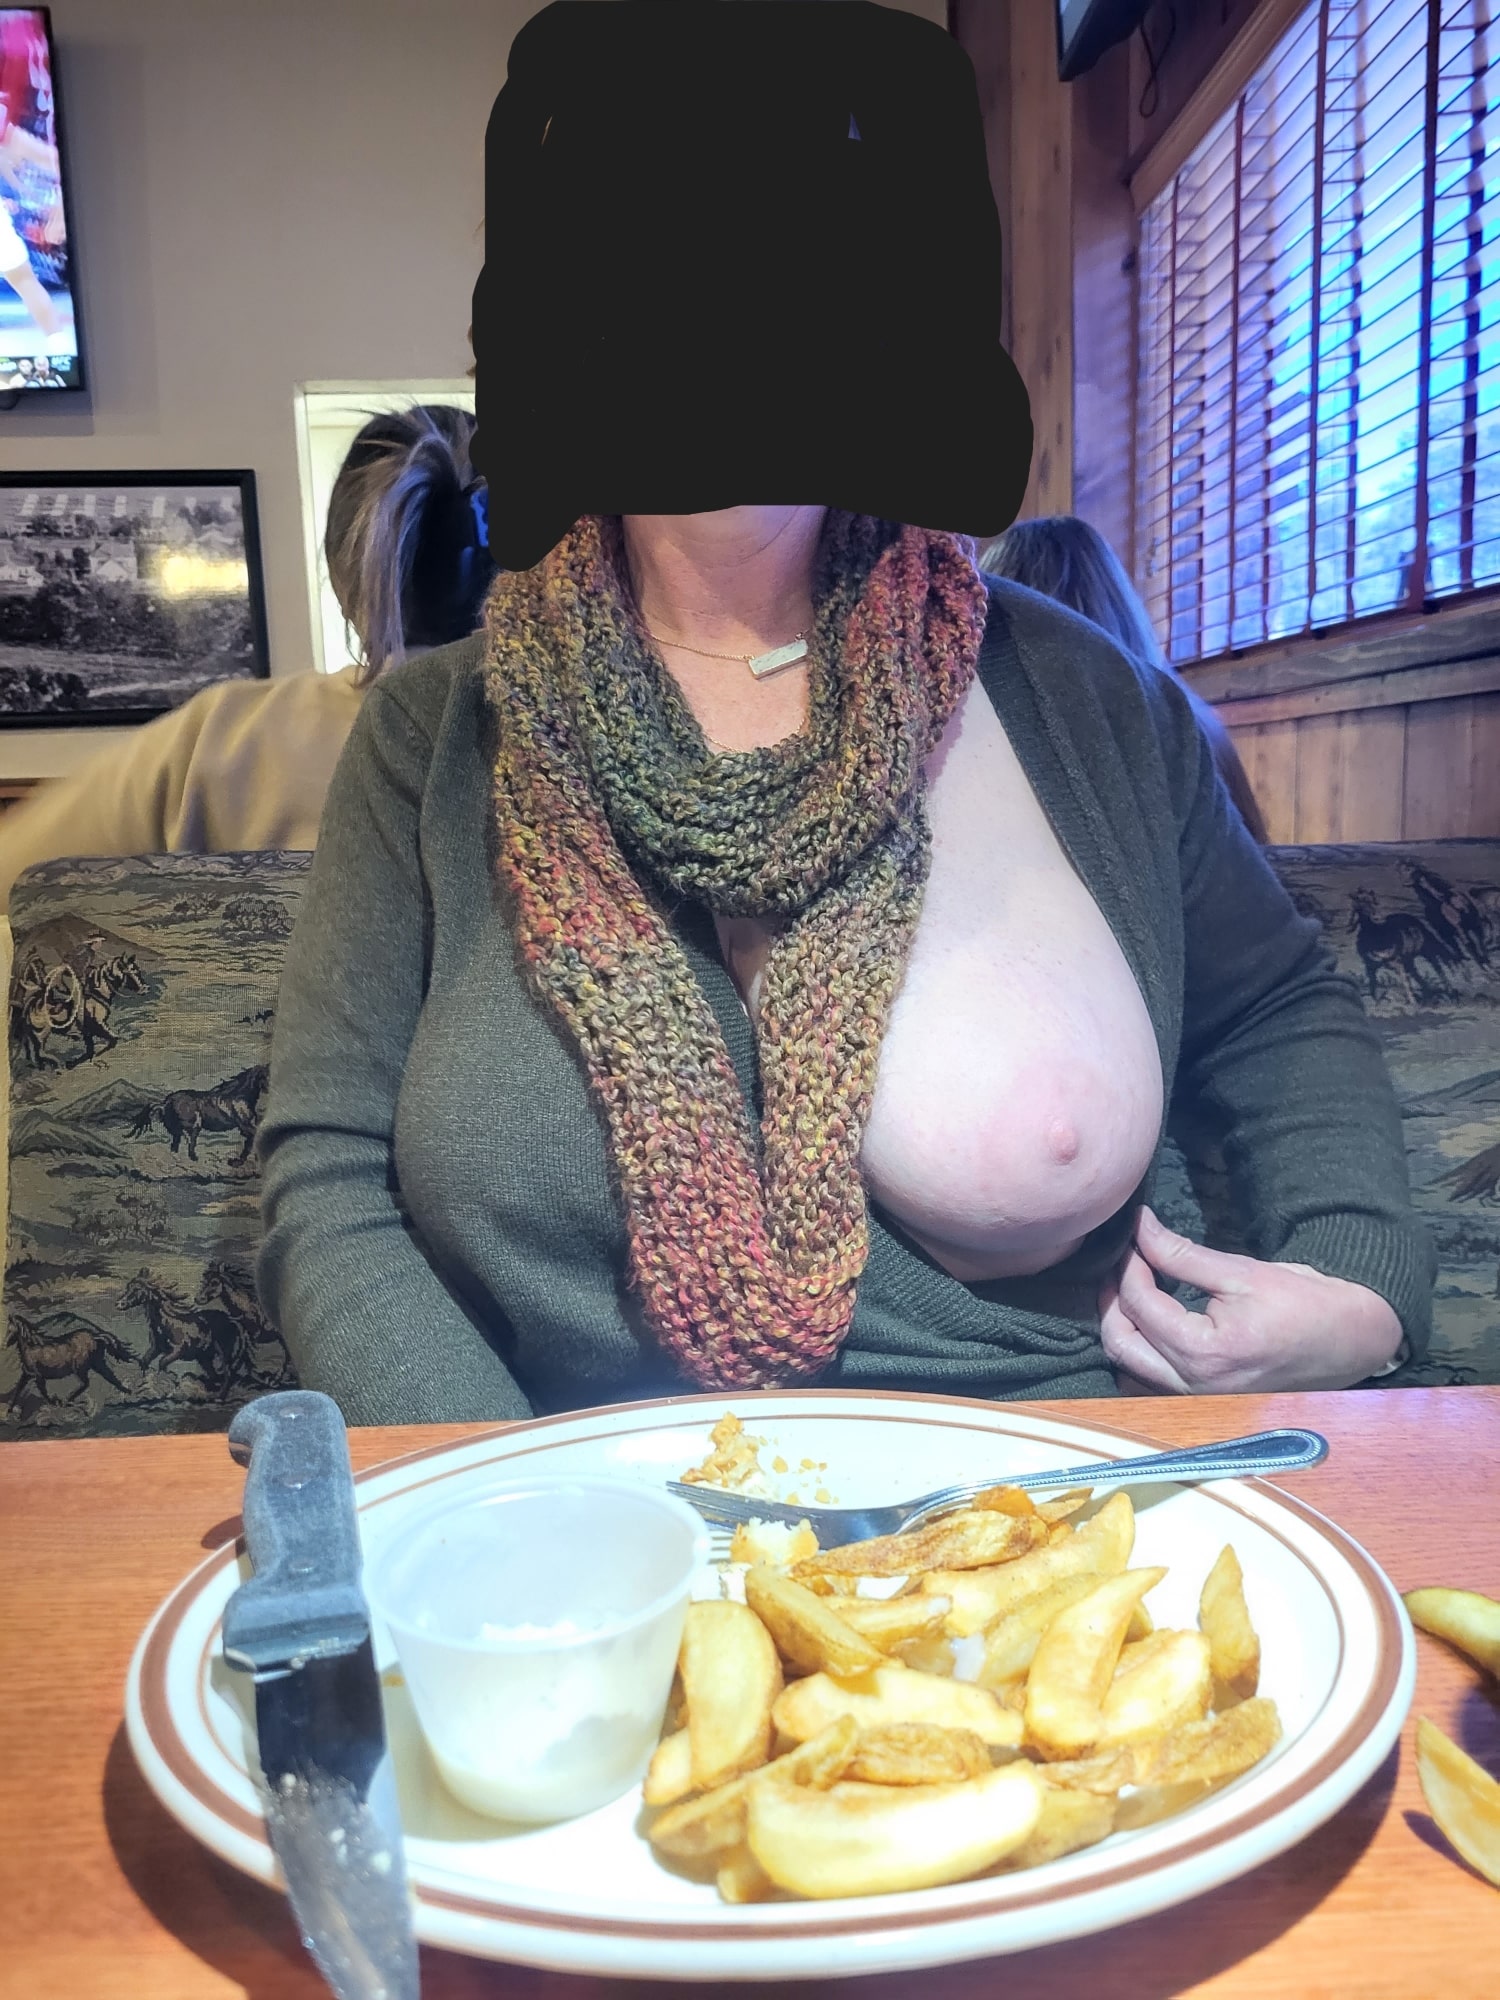 Flashing massive boob in the restaurant real nudity public flashing mature boobs flash